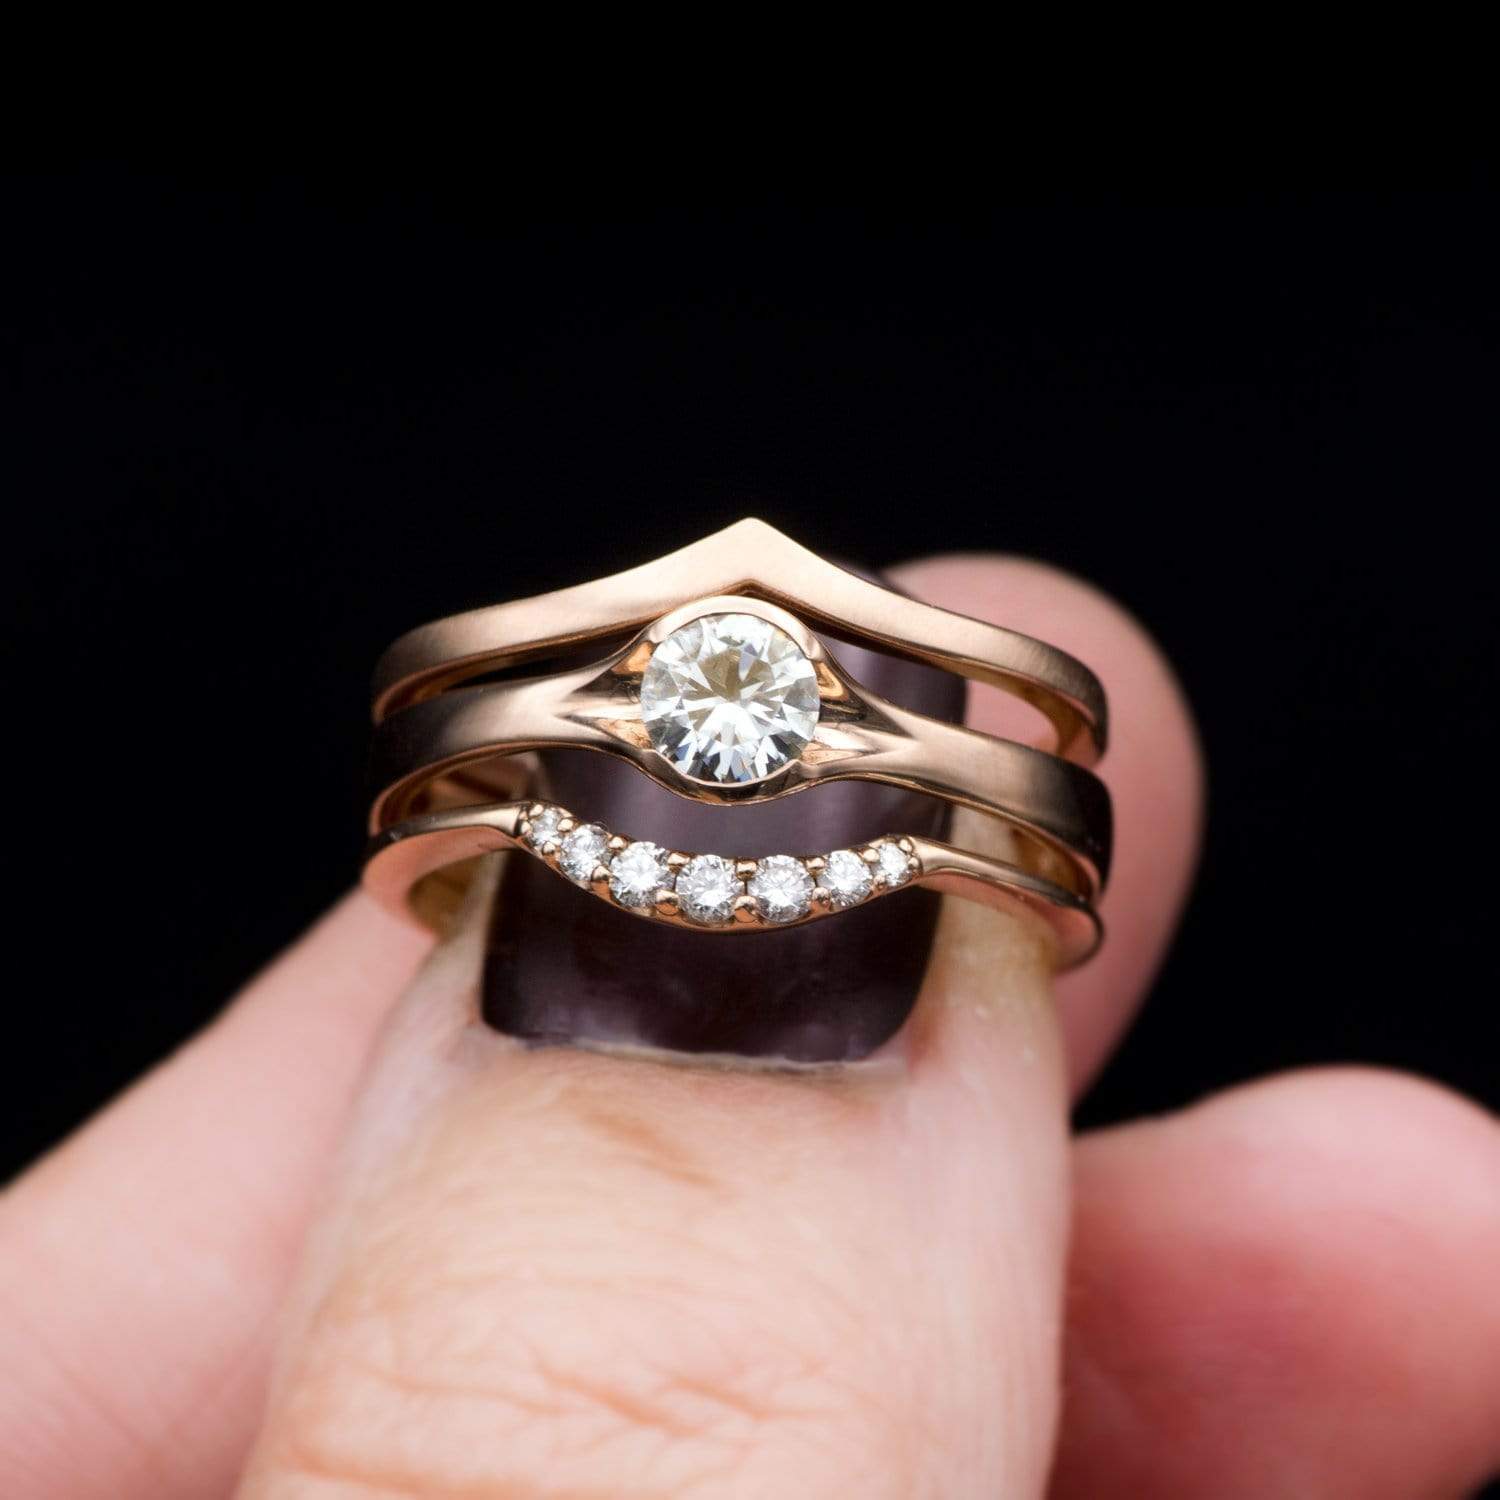 2 Carat Real Diamond Ring, Solid 14k Gold, Engagement and Wedding Ring Set,  Natural Princess Cut, Handmade Jewelry, F/VS2 -  Israel